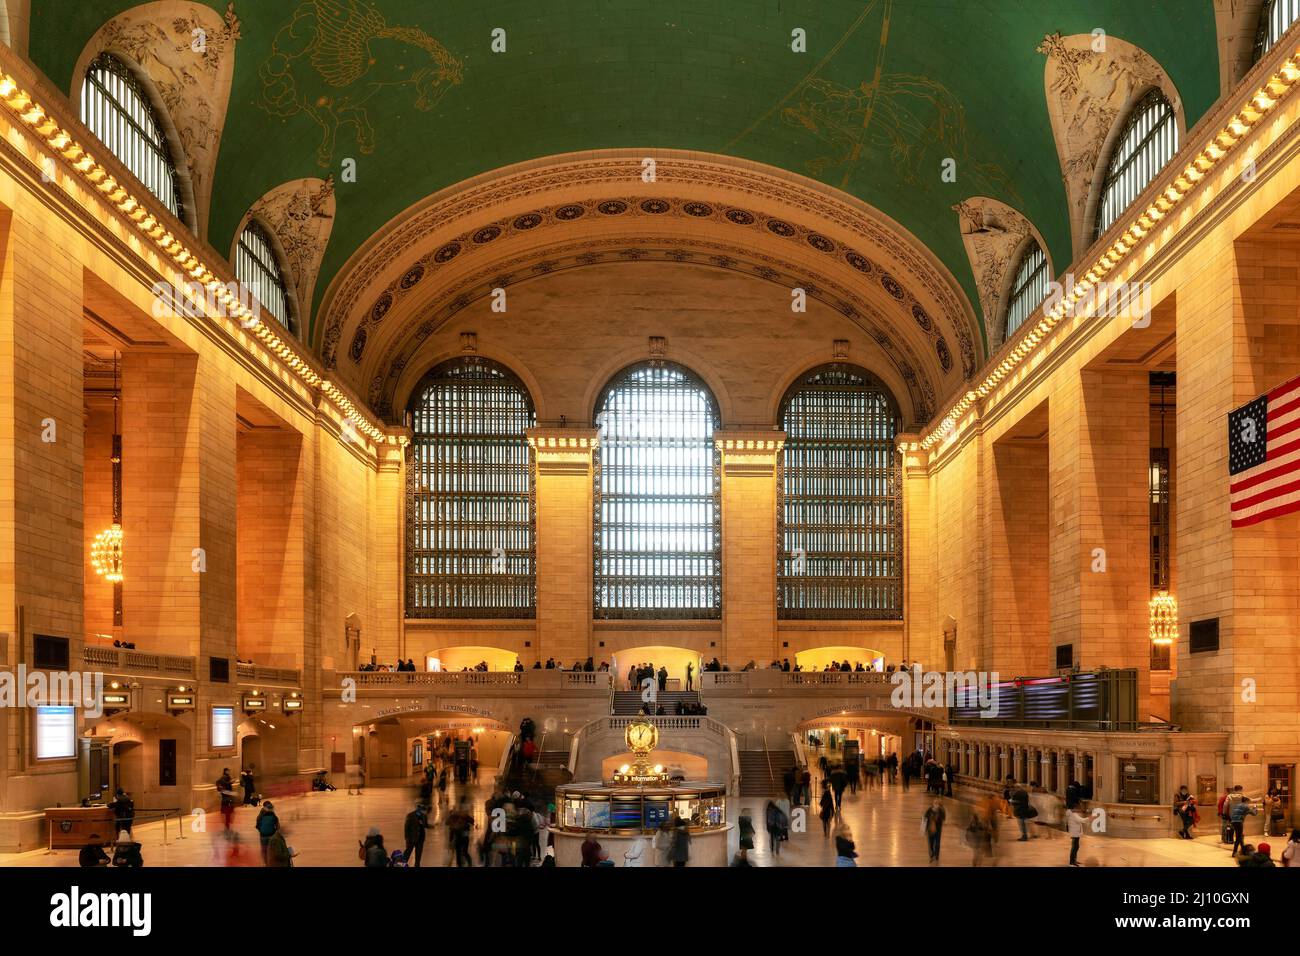 The Grand Central Terminal, Main lobby, New York City. Stock Photo